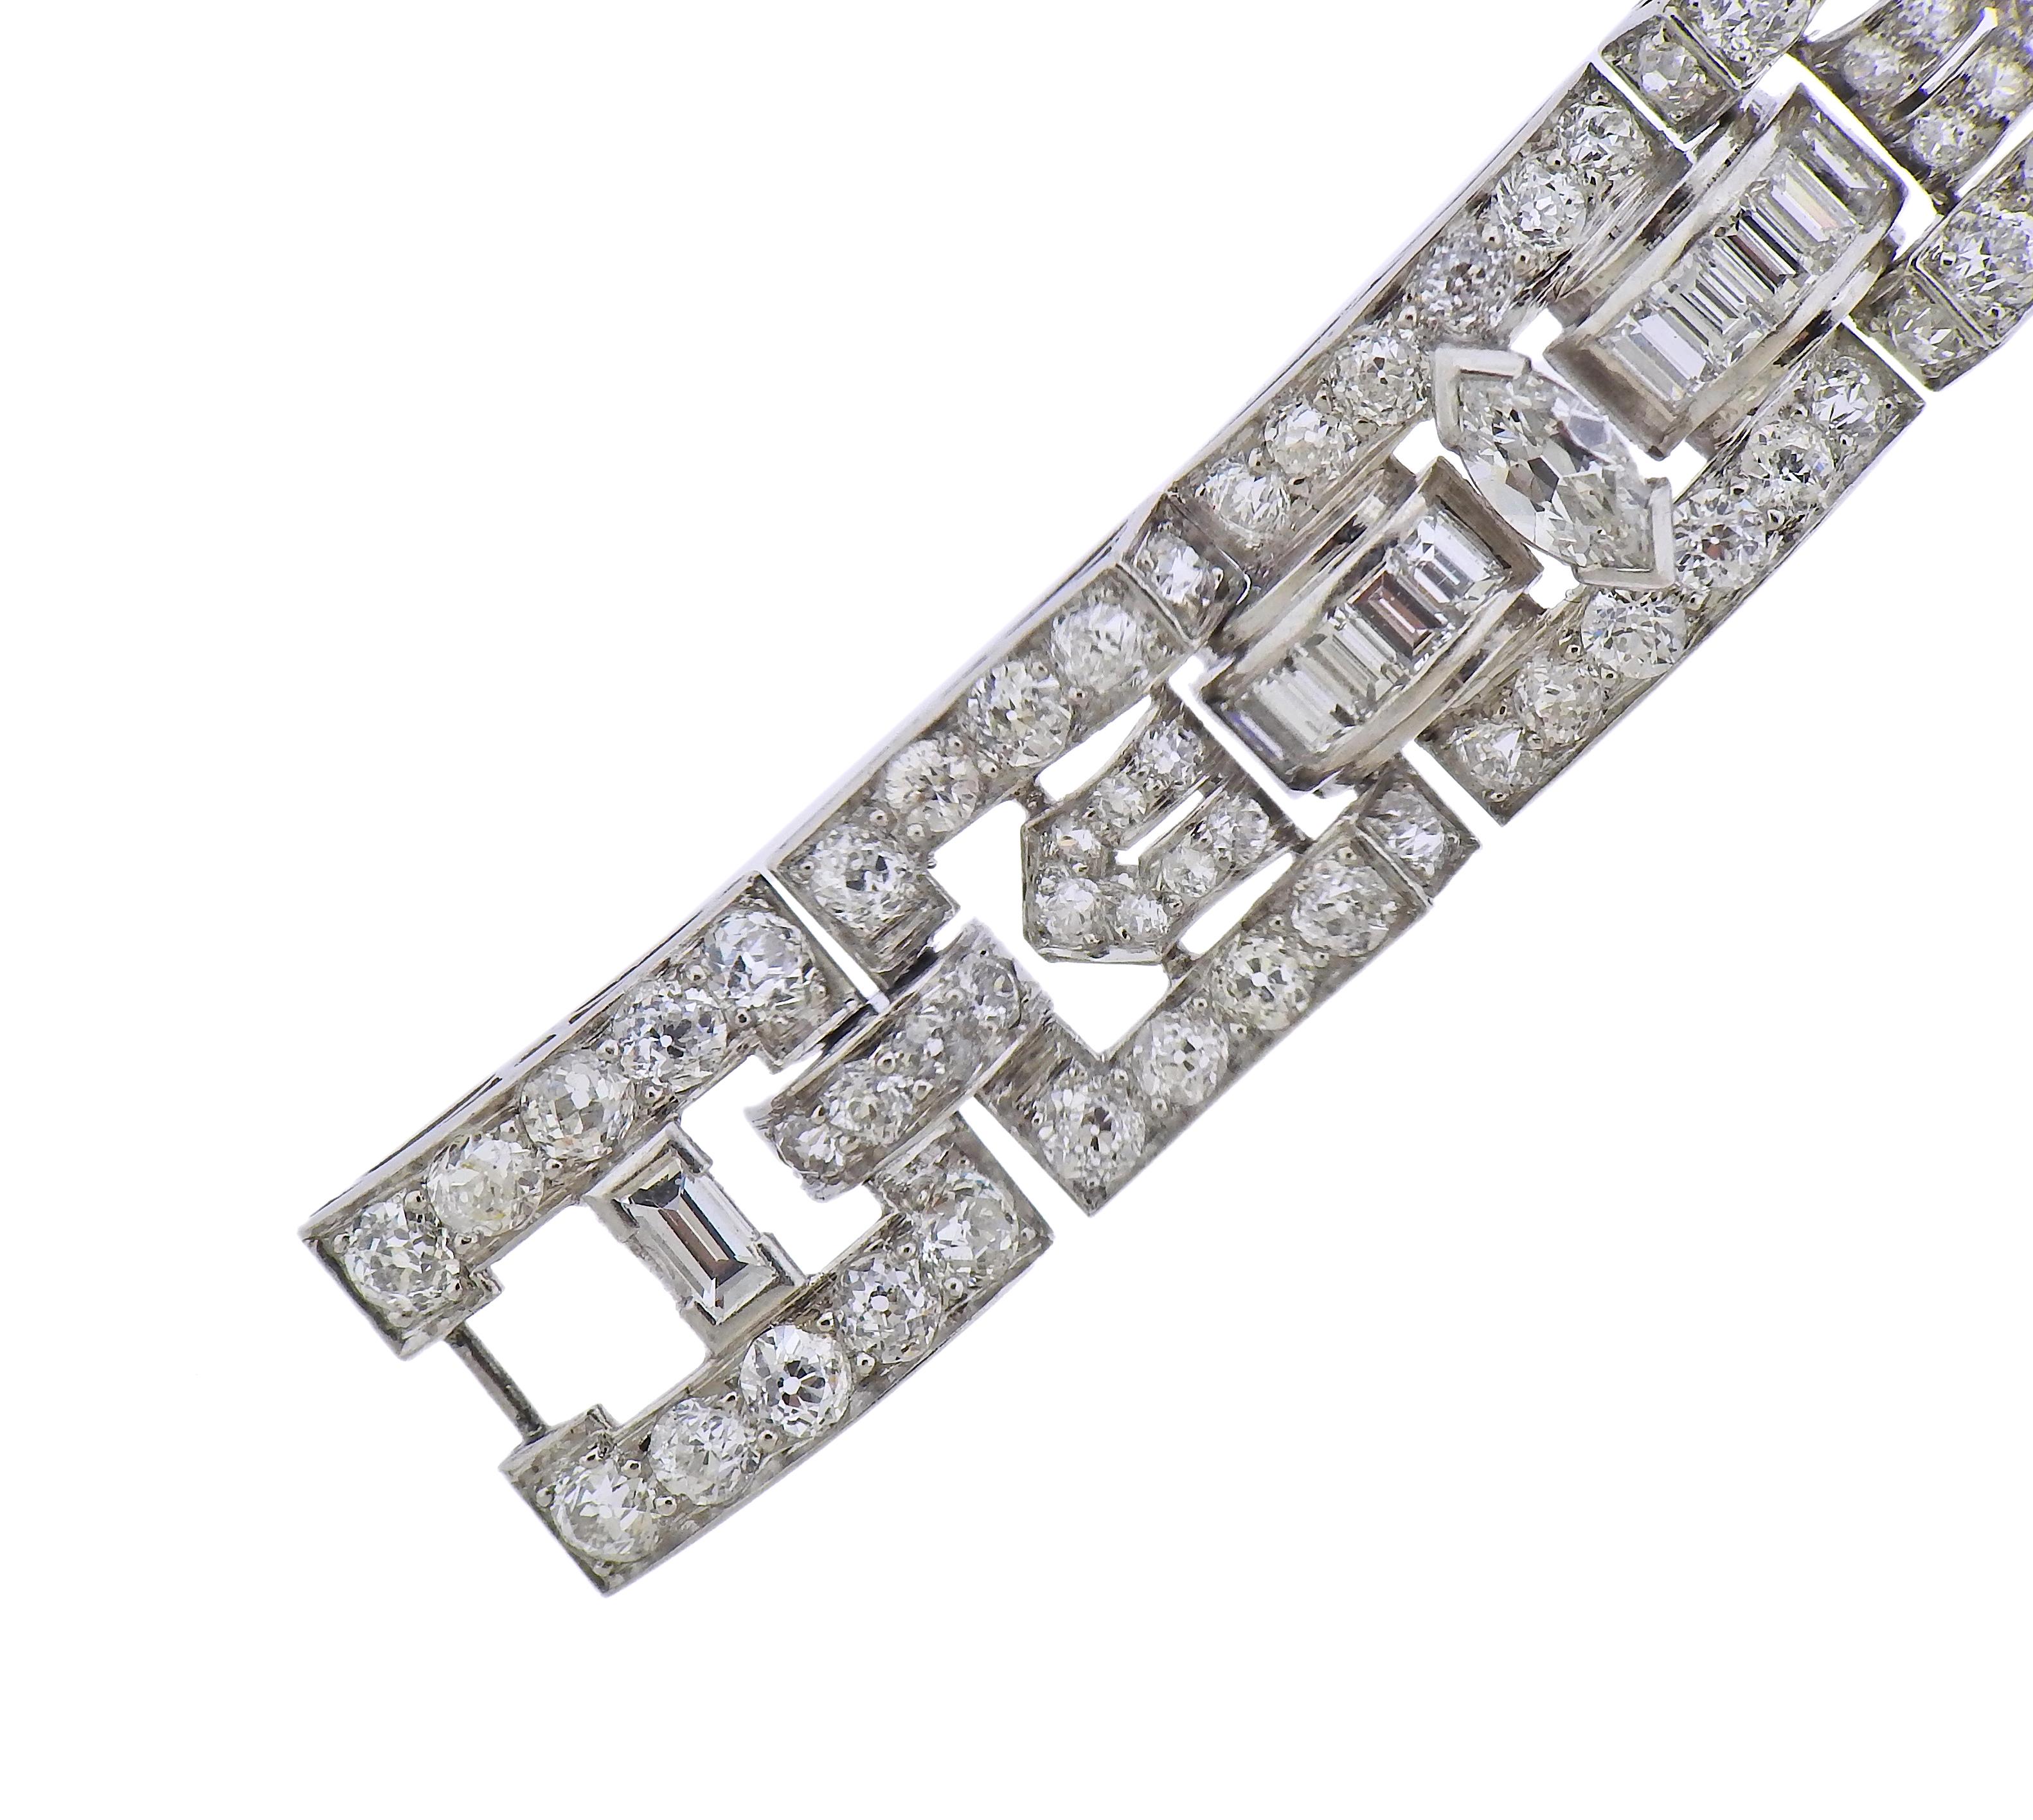 Exquisite Cartier circa 1930s, Art Deco platinum bracelet, with approximately 12 carats in diamonds. Bracelet is 7